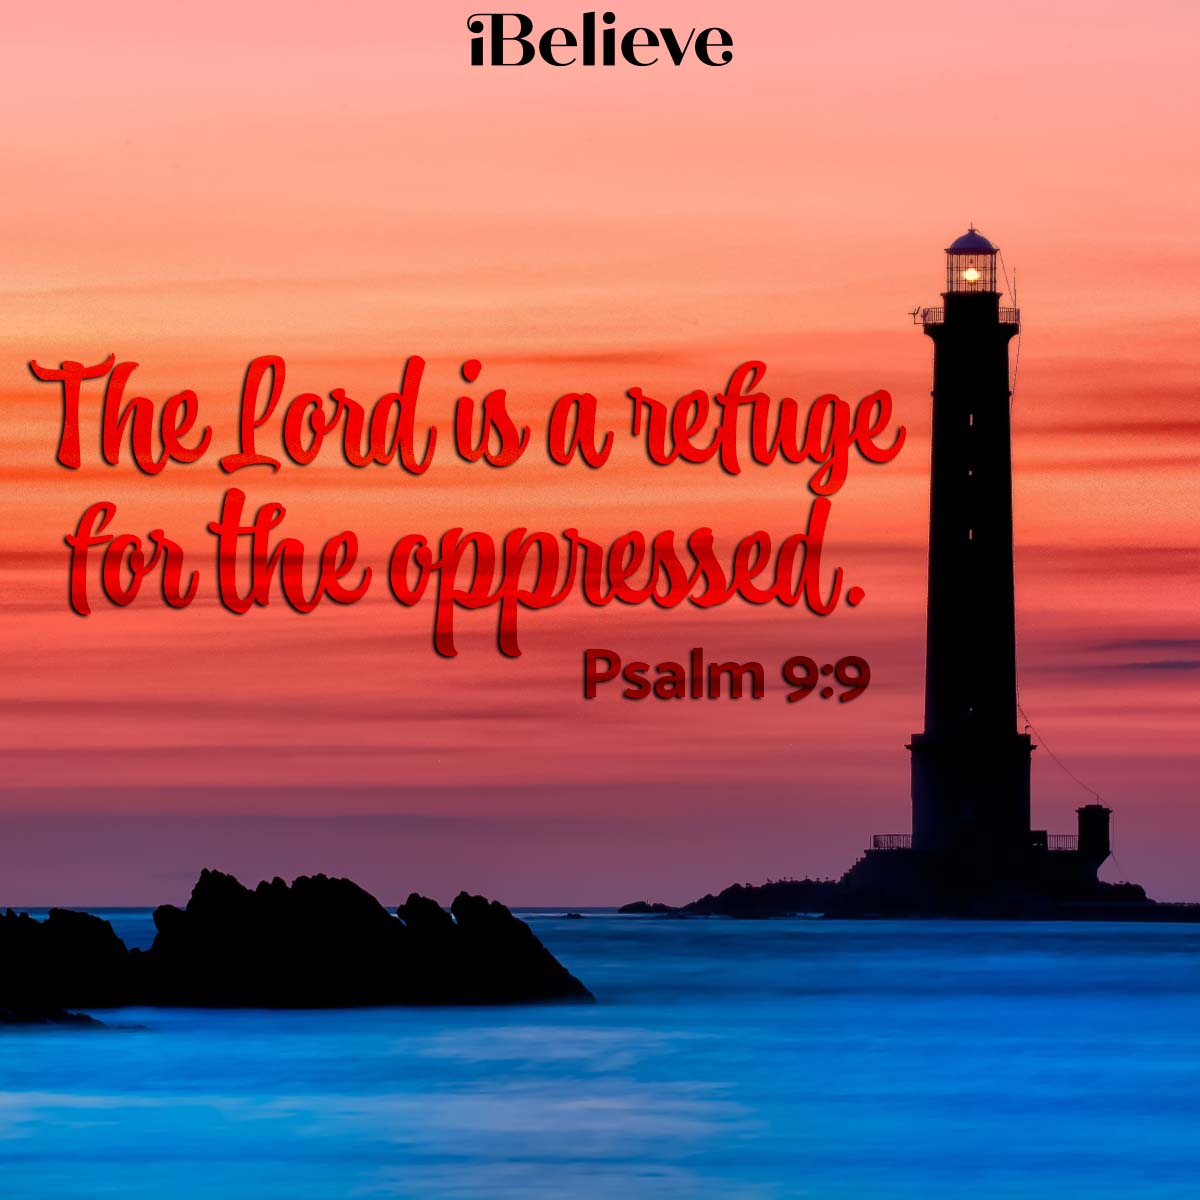 Psalm 9:9, inspirational image